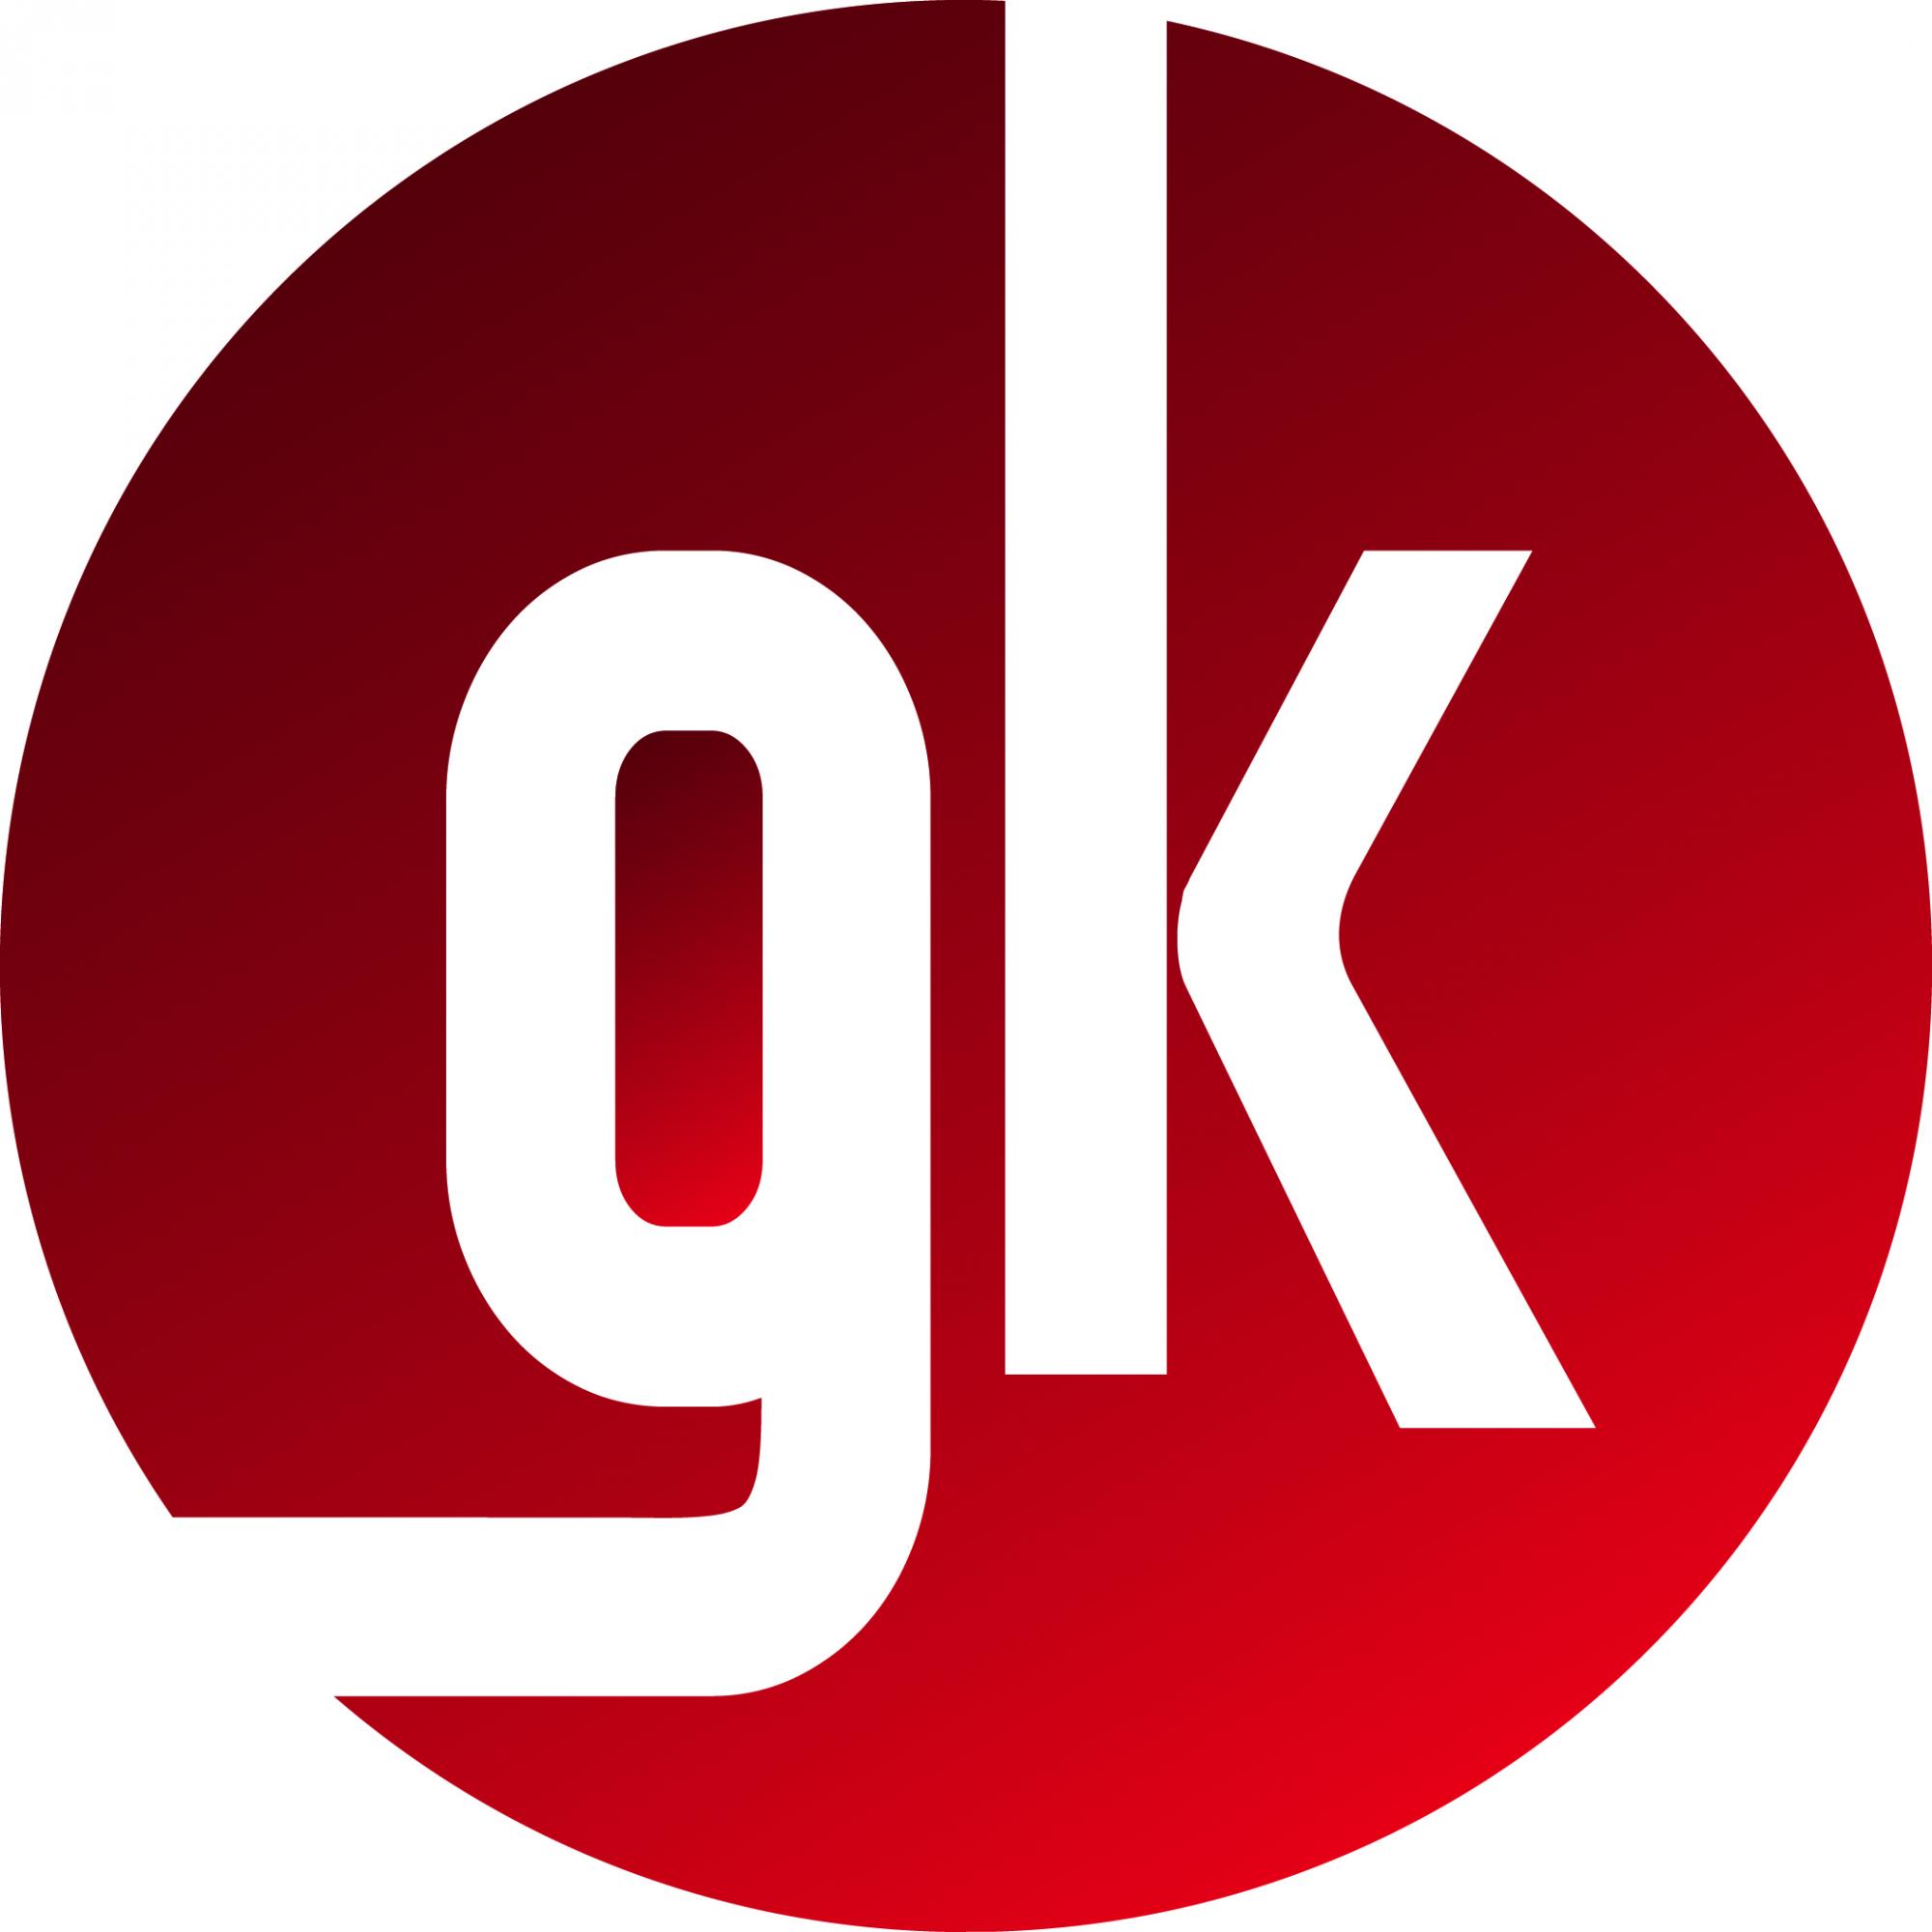 GK Logo - Gk Logo. Gk India Today